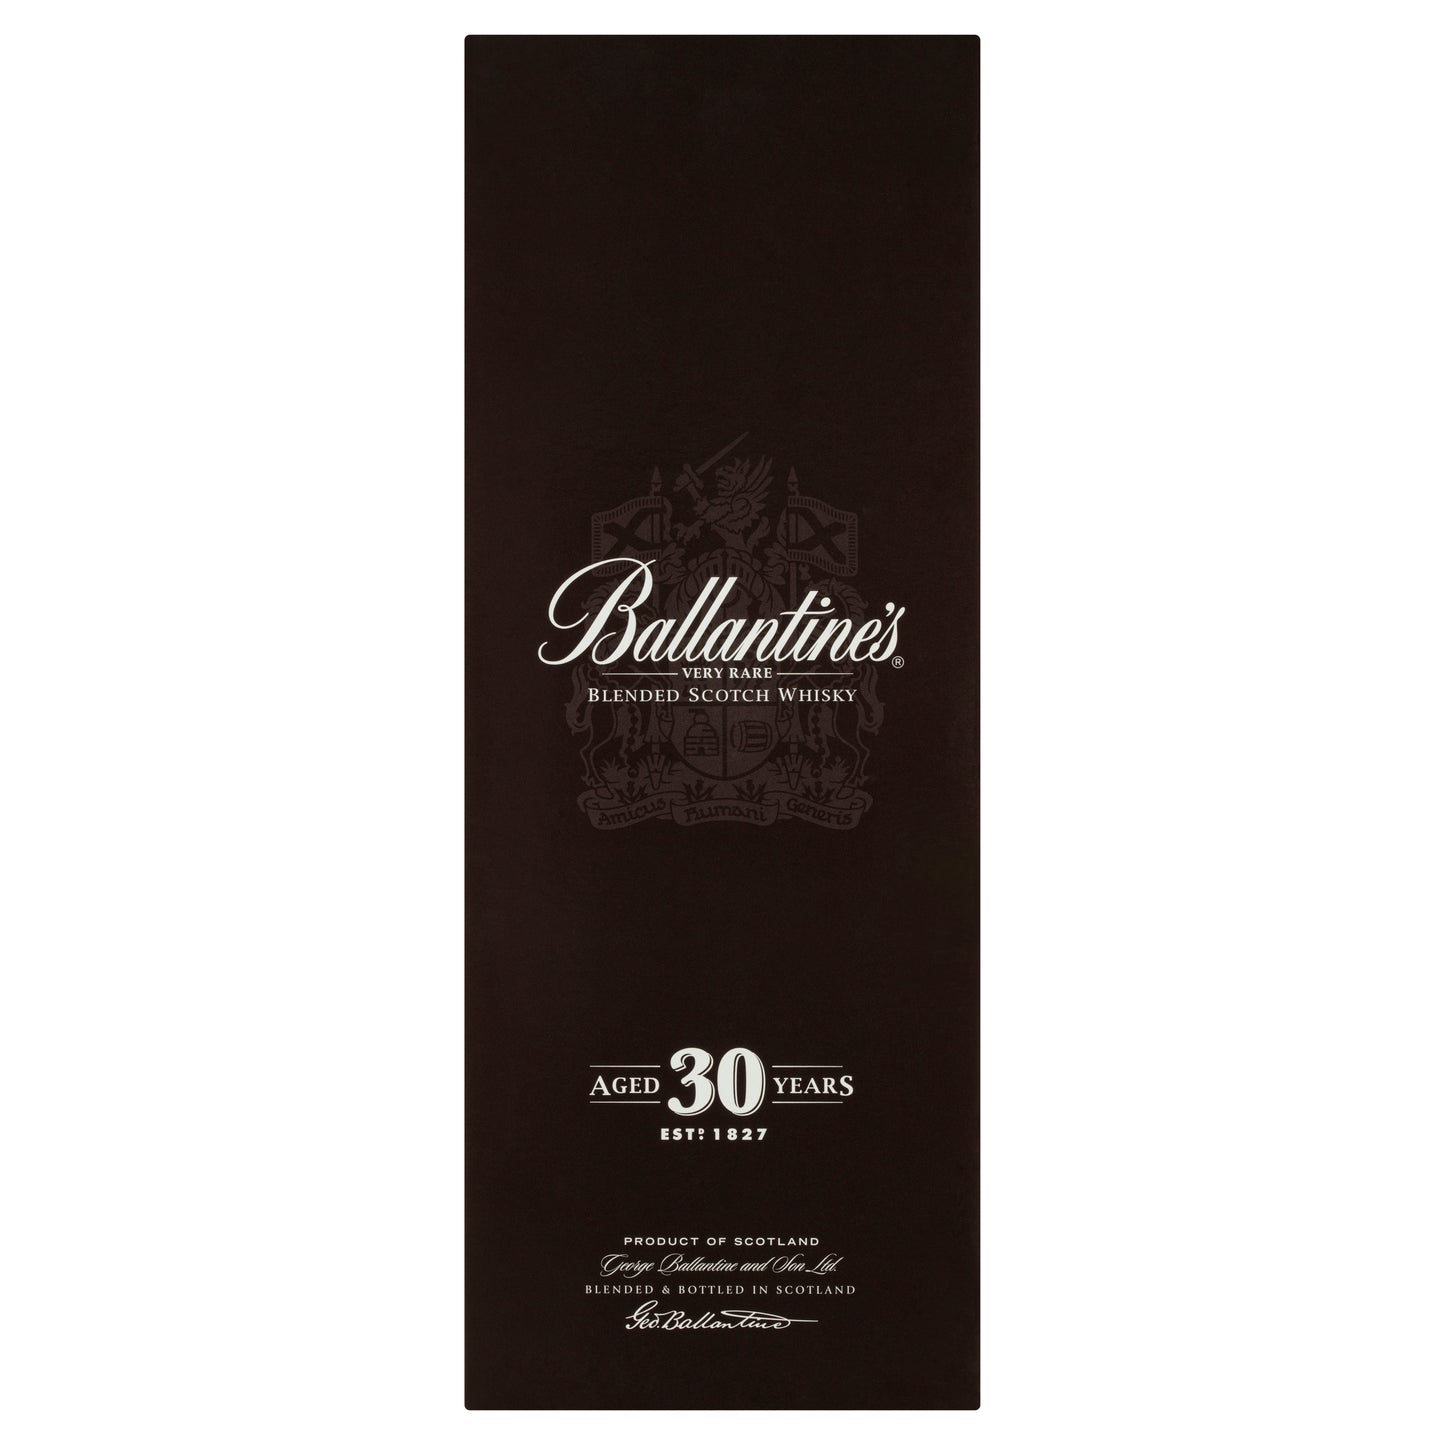 Ballantines Aged 30 Years Scotch Whisky 700ml